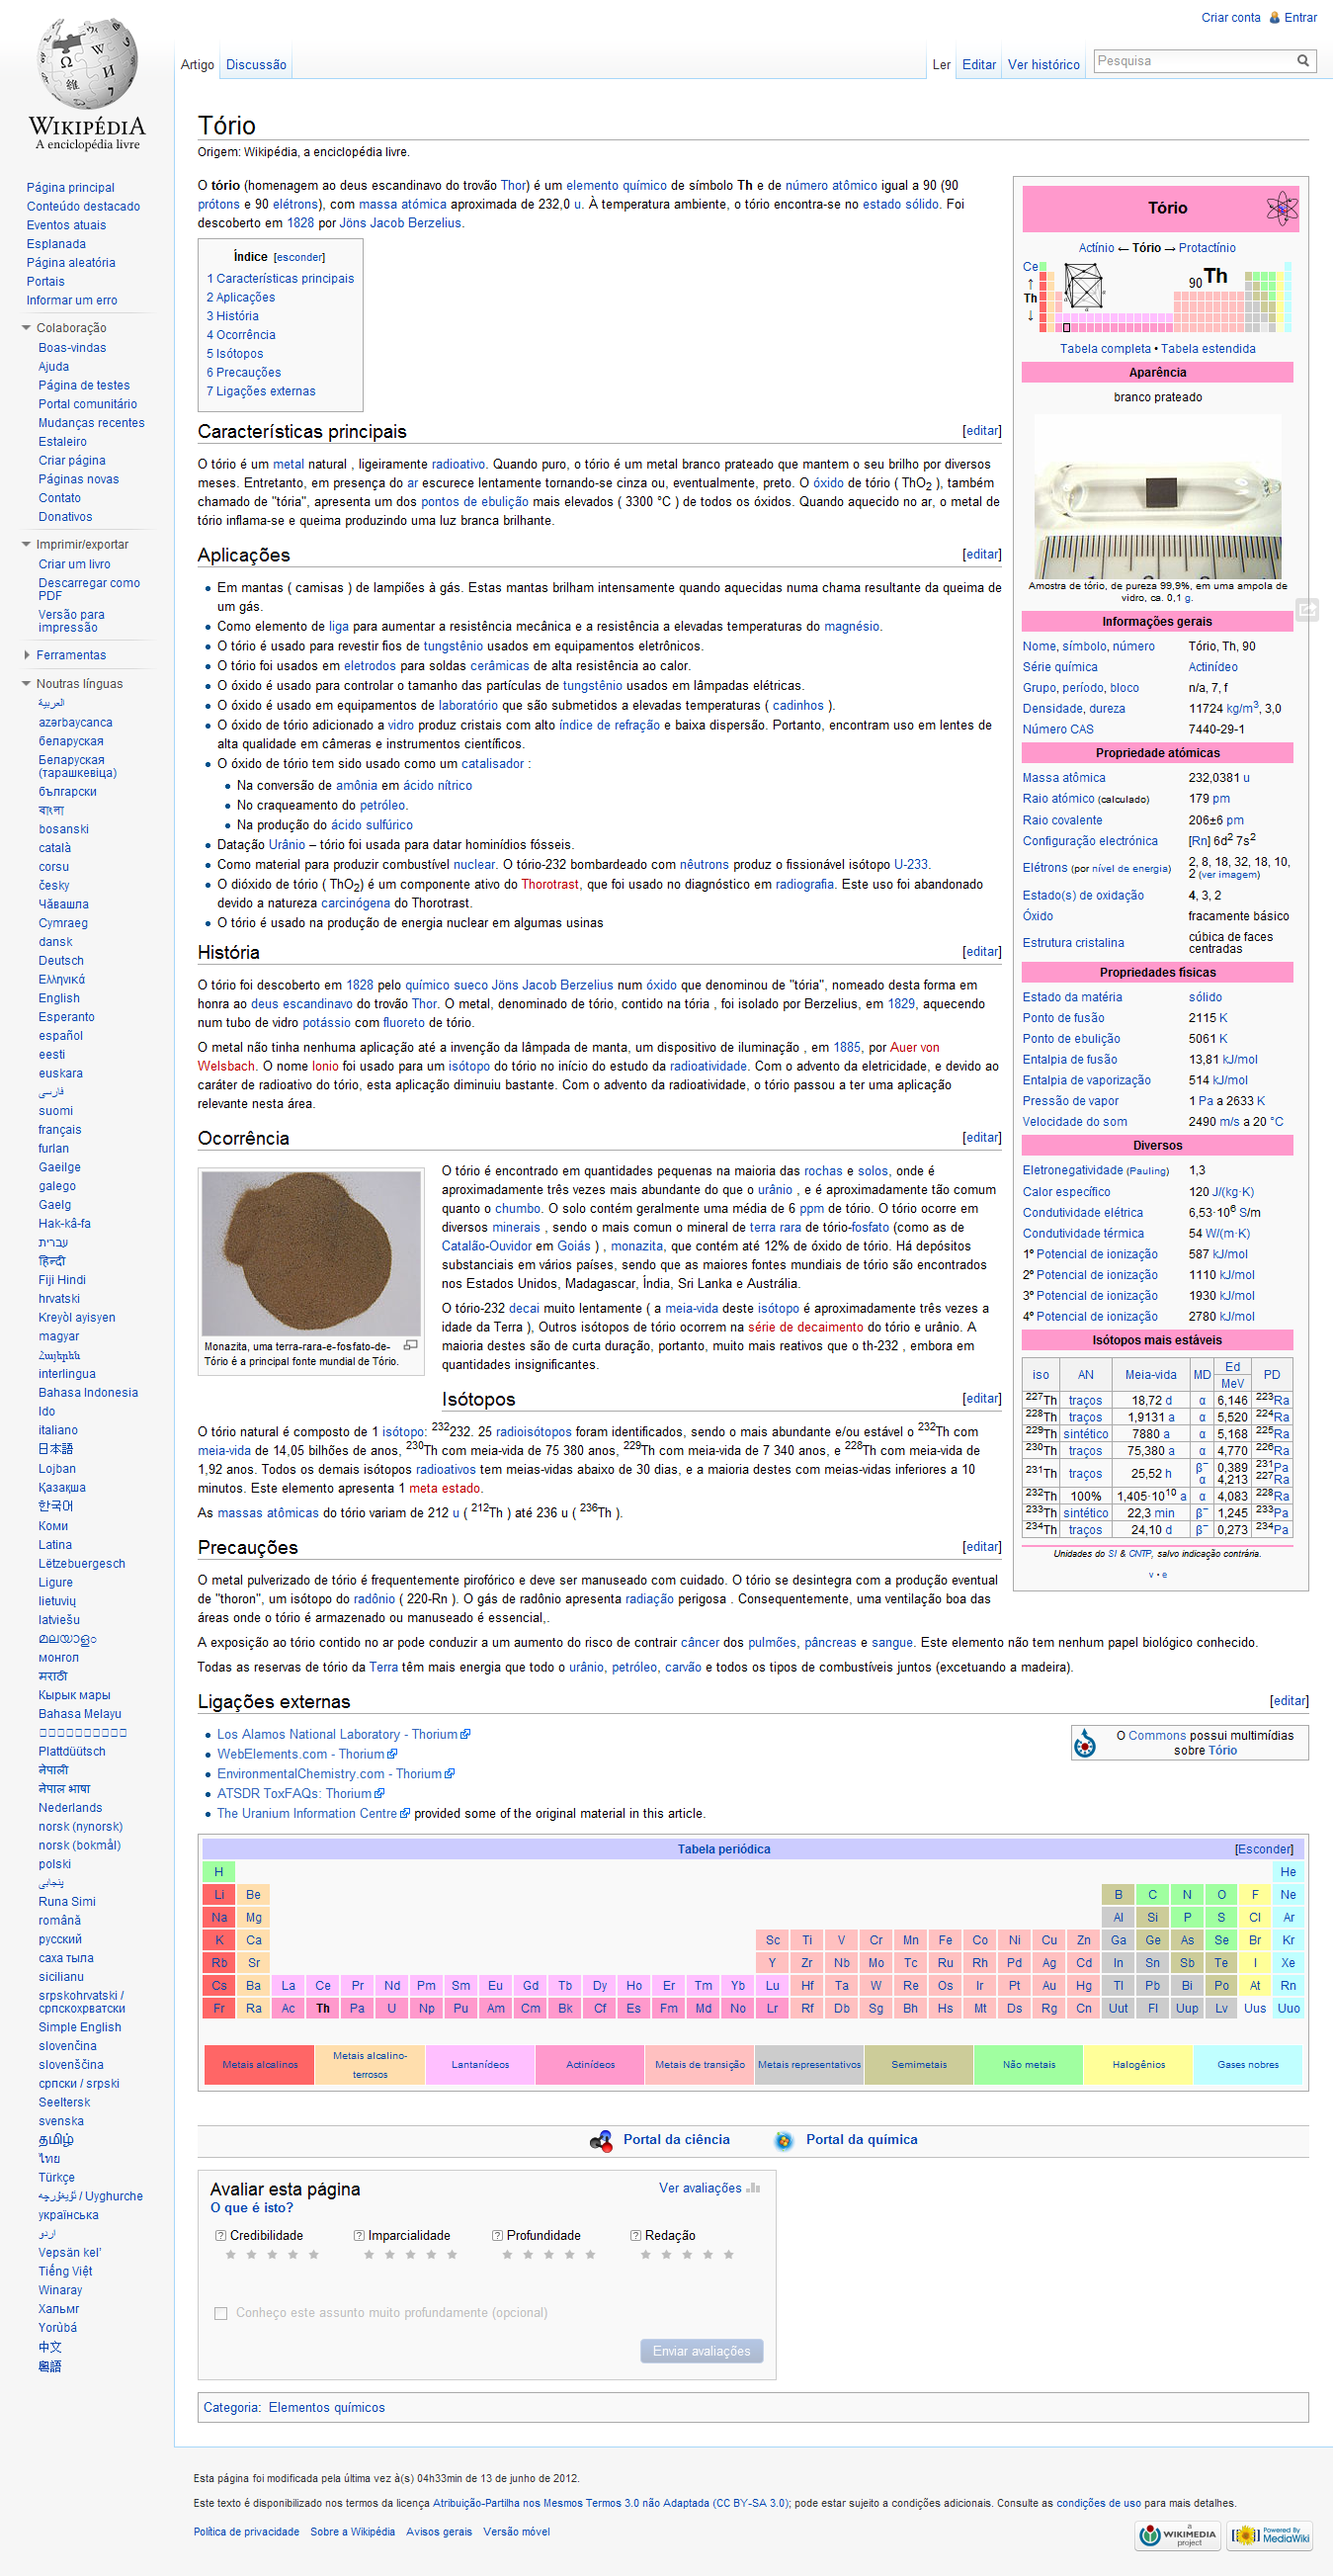 Torio Wikipedia View Capture